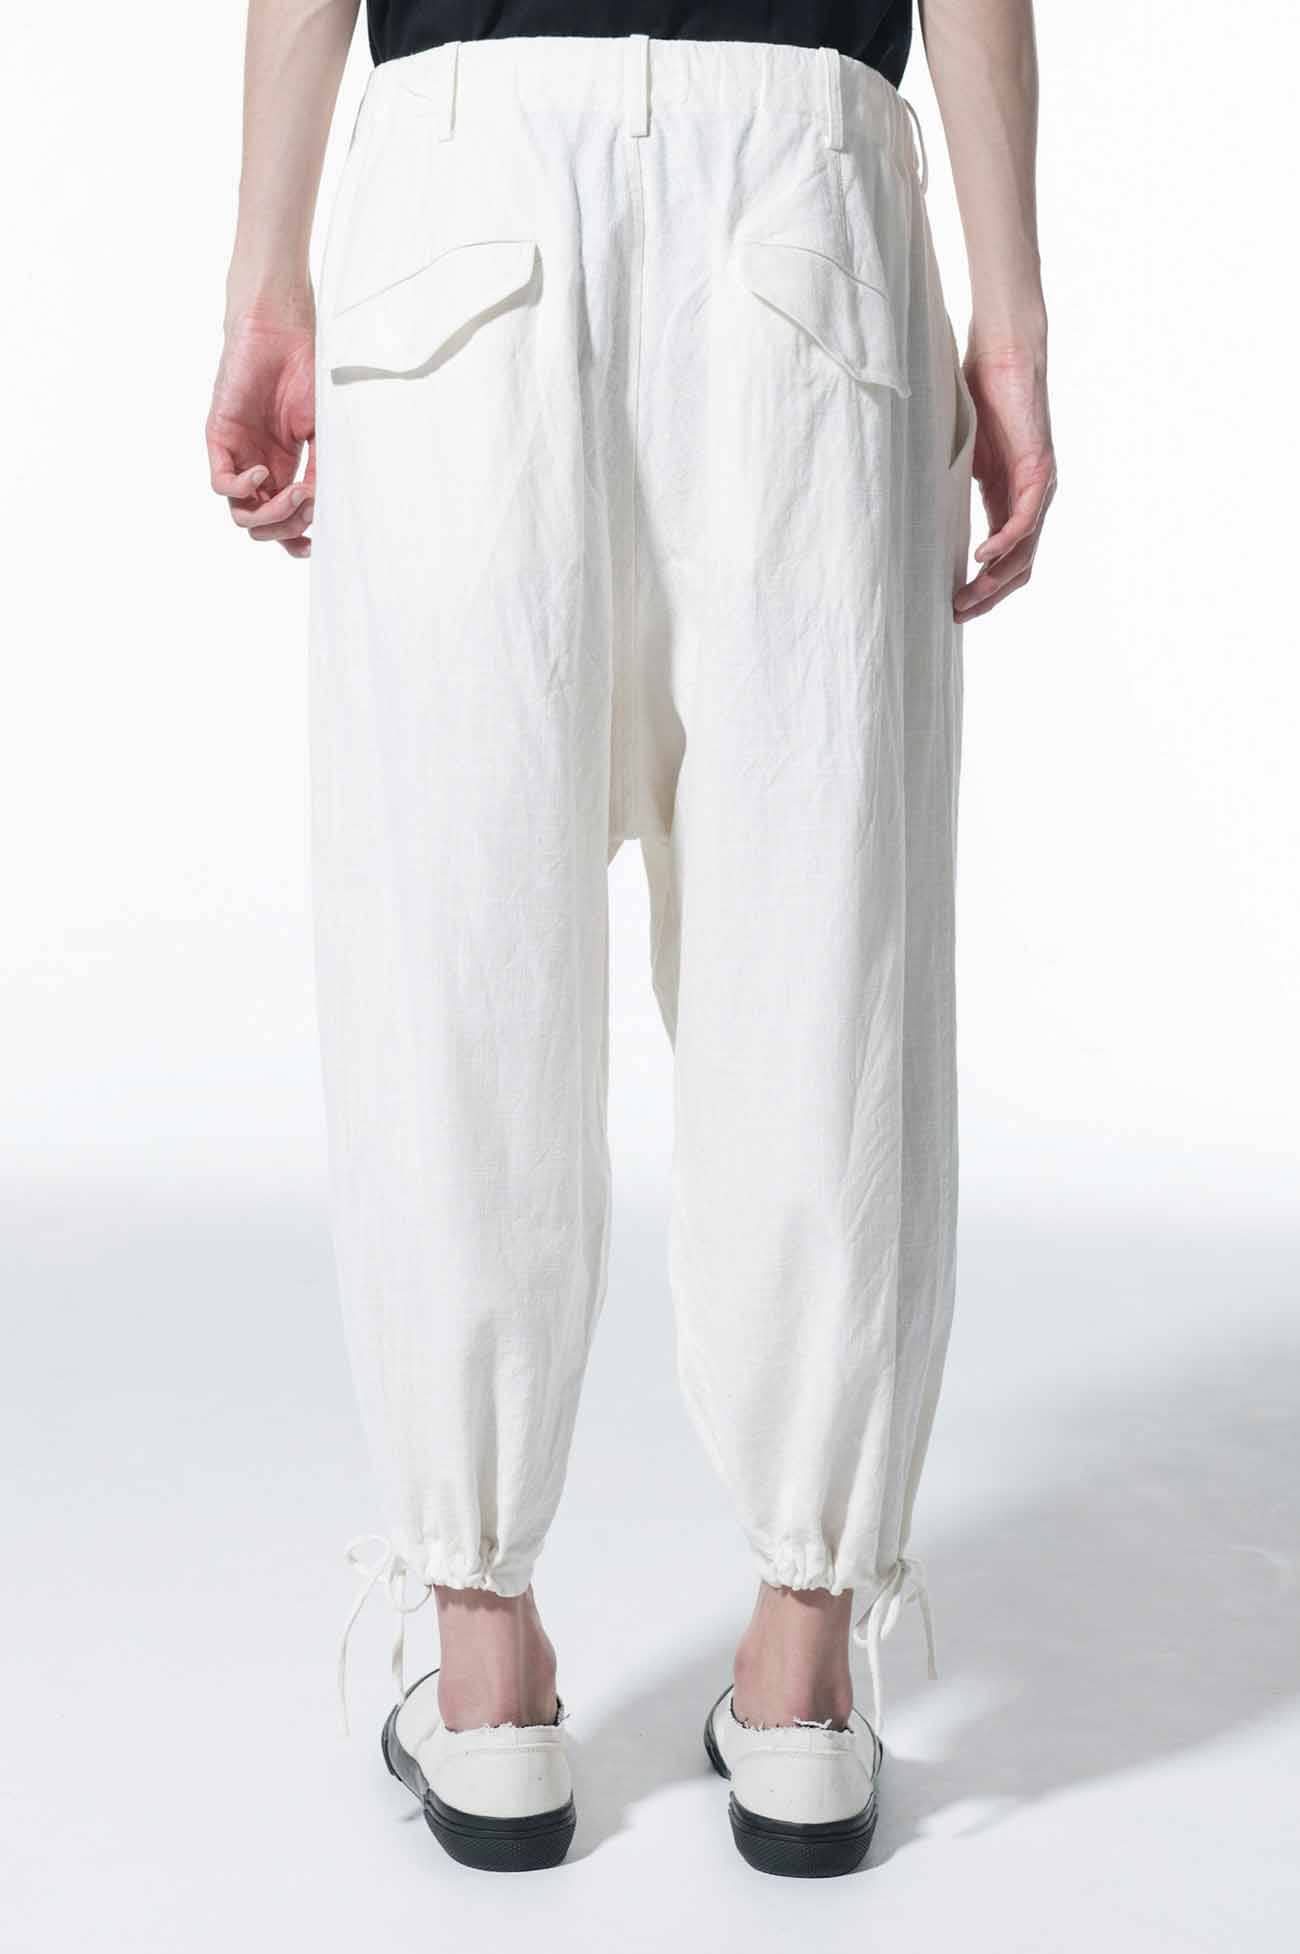 Indian Kadi One Tuck Draw String Pants M White S Yte The Shop Yohji Yamamoto